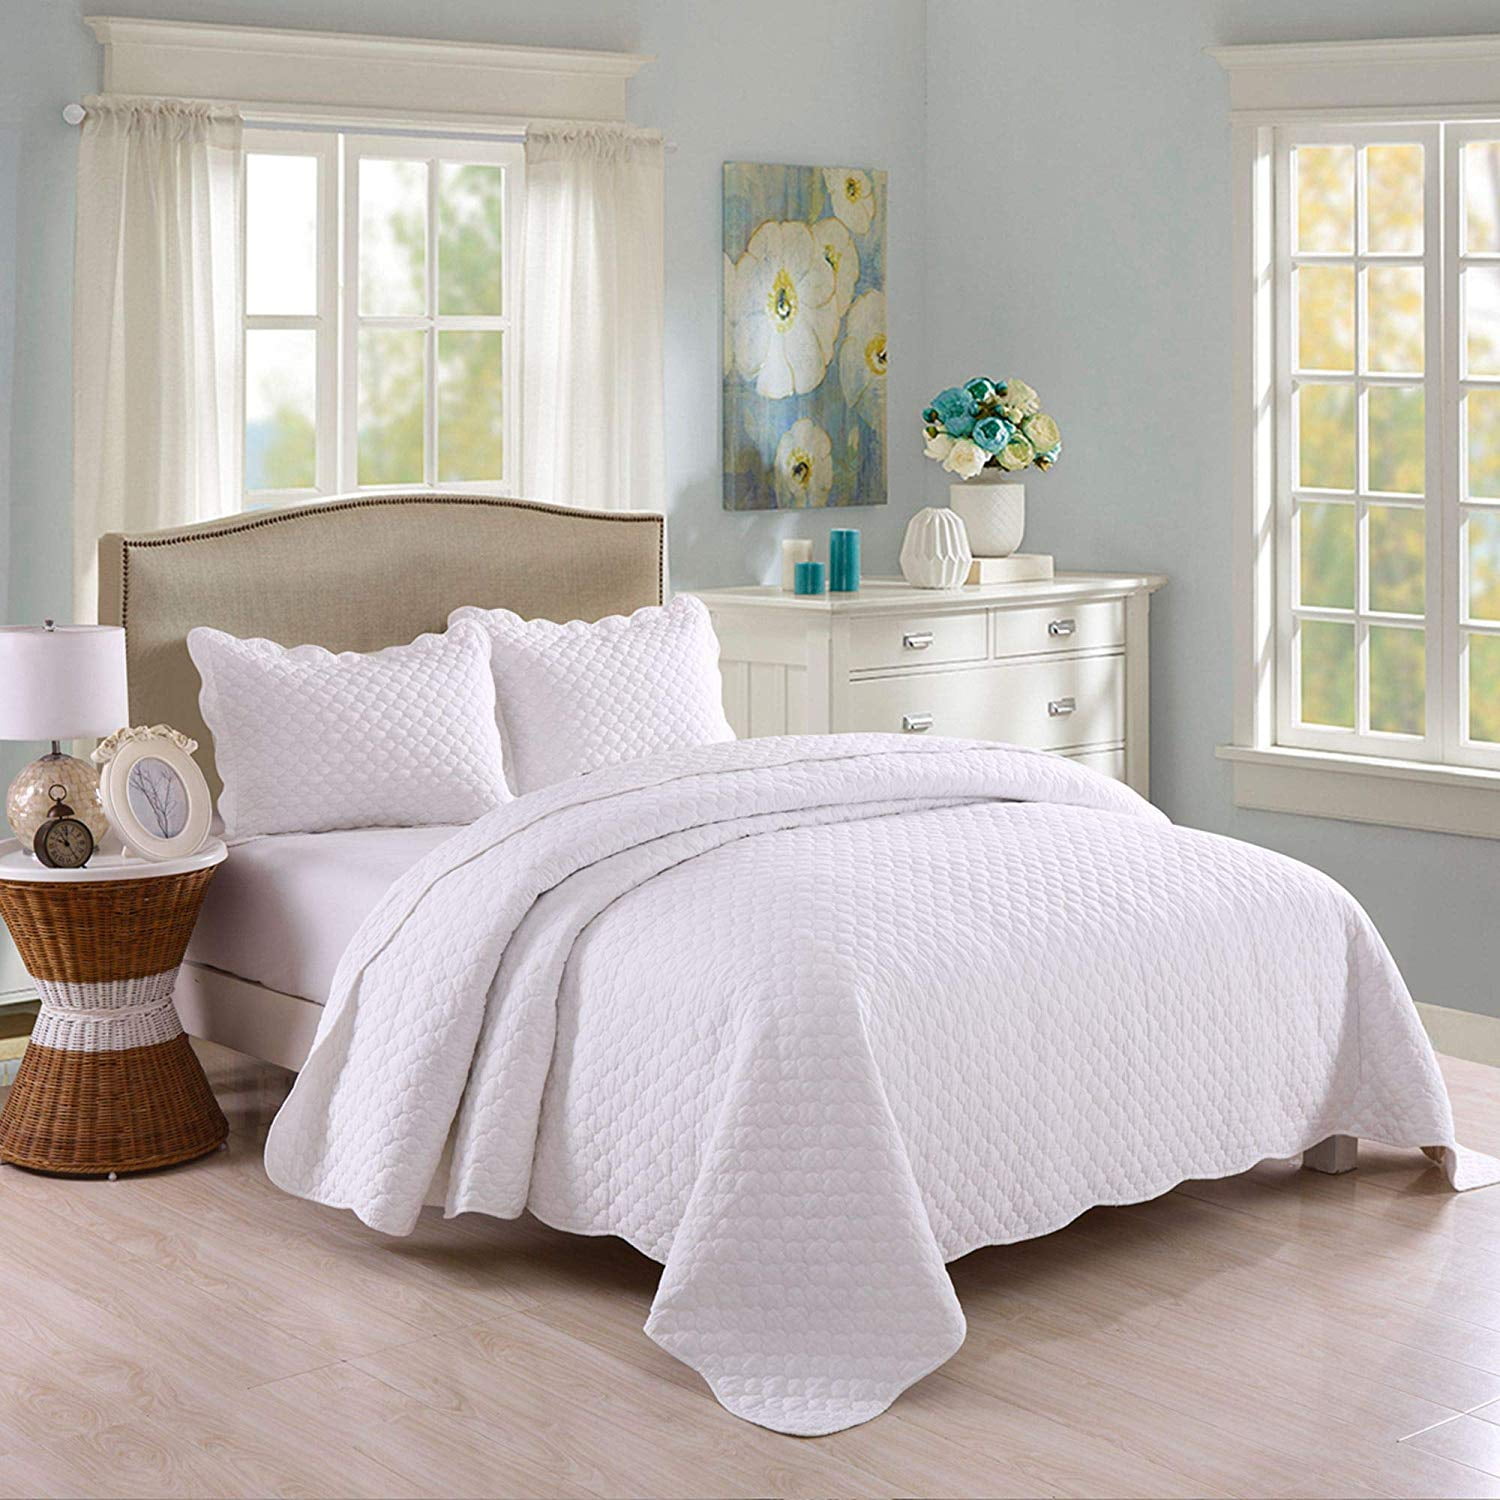 Details about   Queen's House Farmhouse Ruffled Comforter Set,White Lightweight Fluffy Comforter 